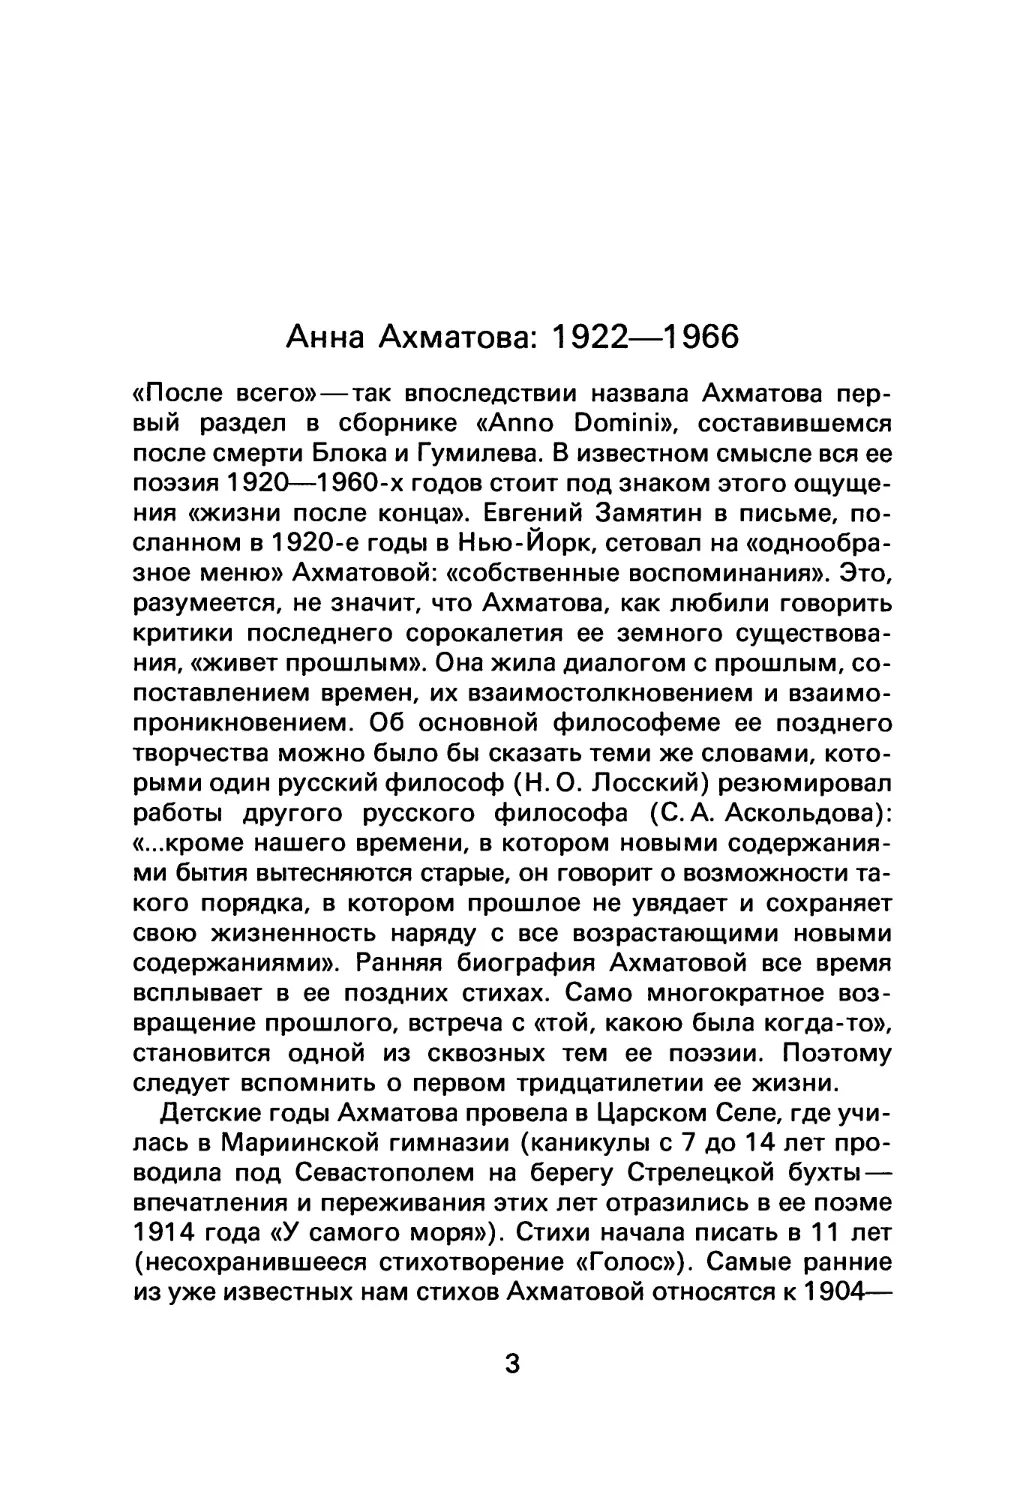 Р. Д. Тименчик. Анна Ахматова: 1922—1966